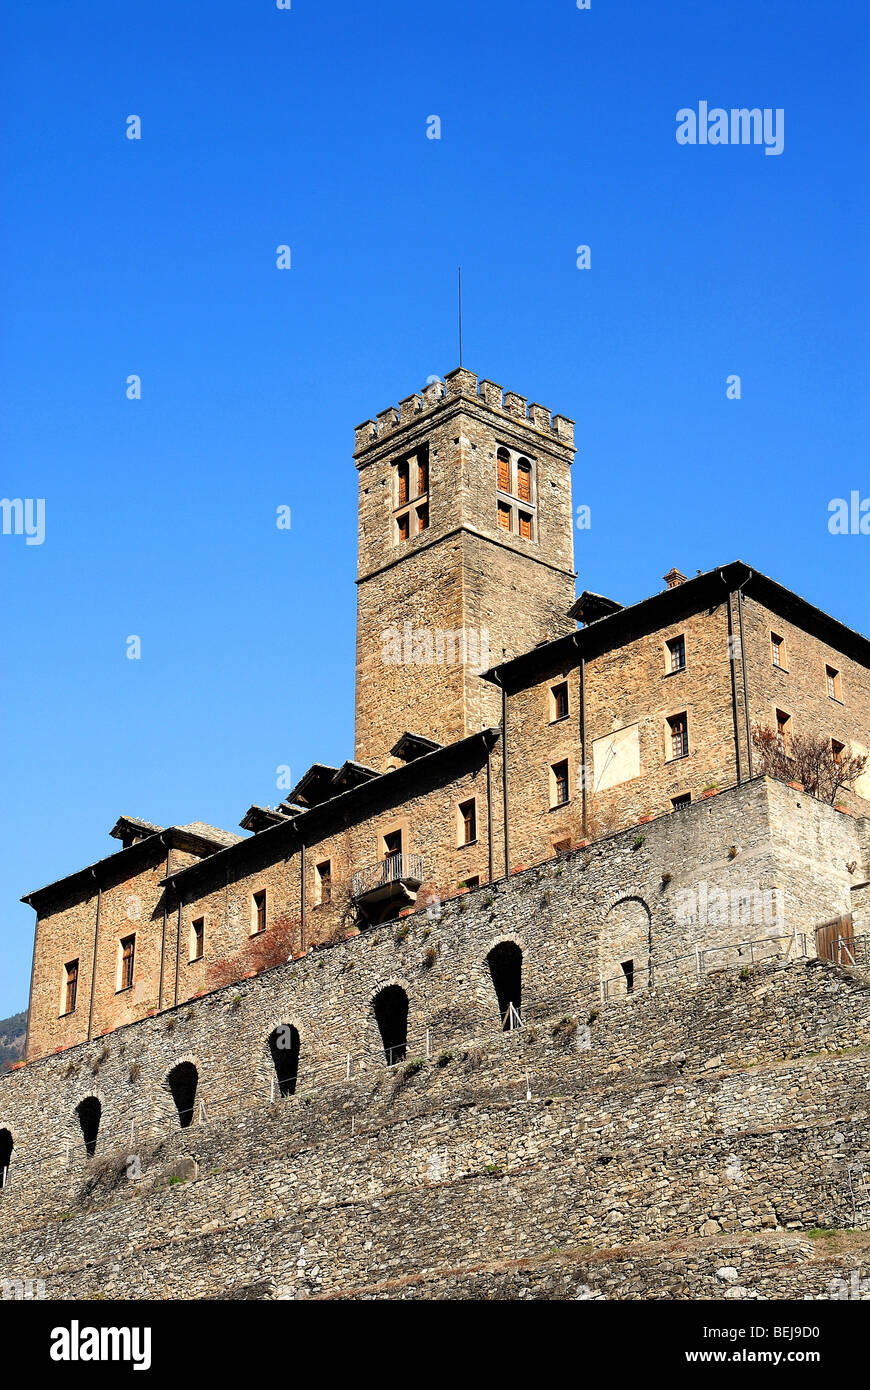 Saint Pierre Castle, Saint Pierre, Aosta province, Aosta Valley Stock Photo